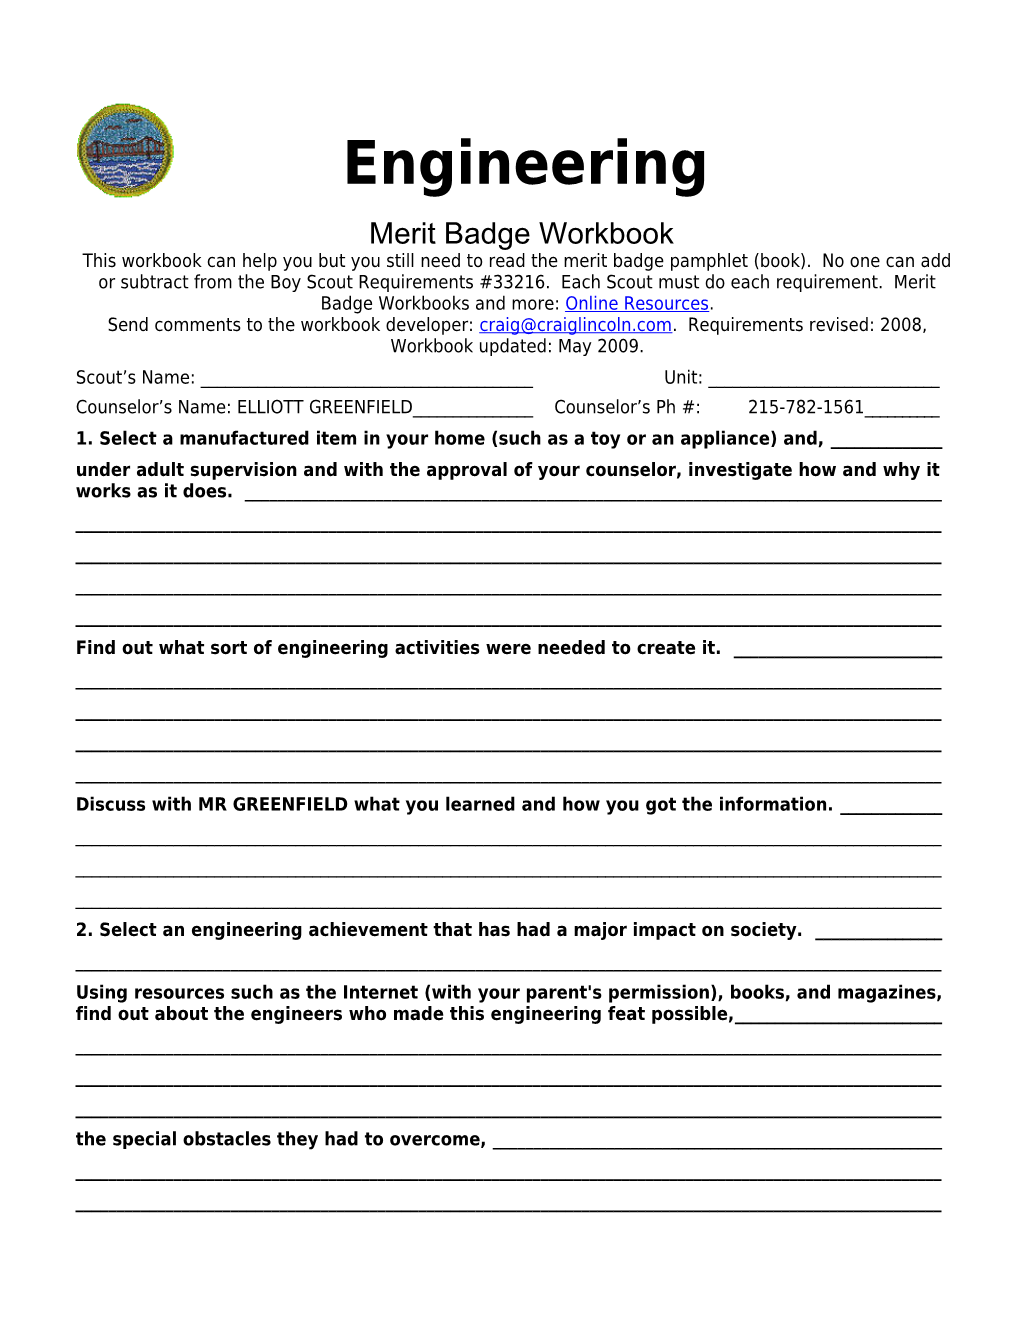 Engineering P. 1 Merit Badge Workbookscout's Name: ______